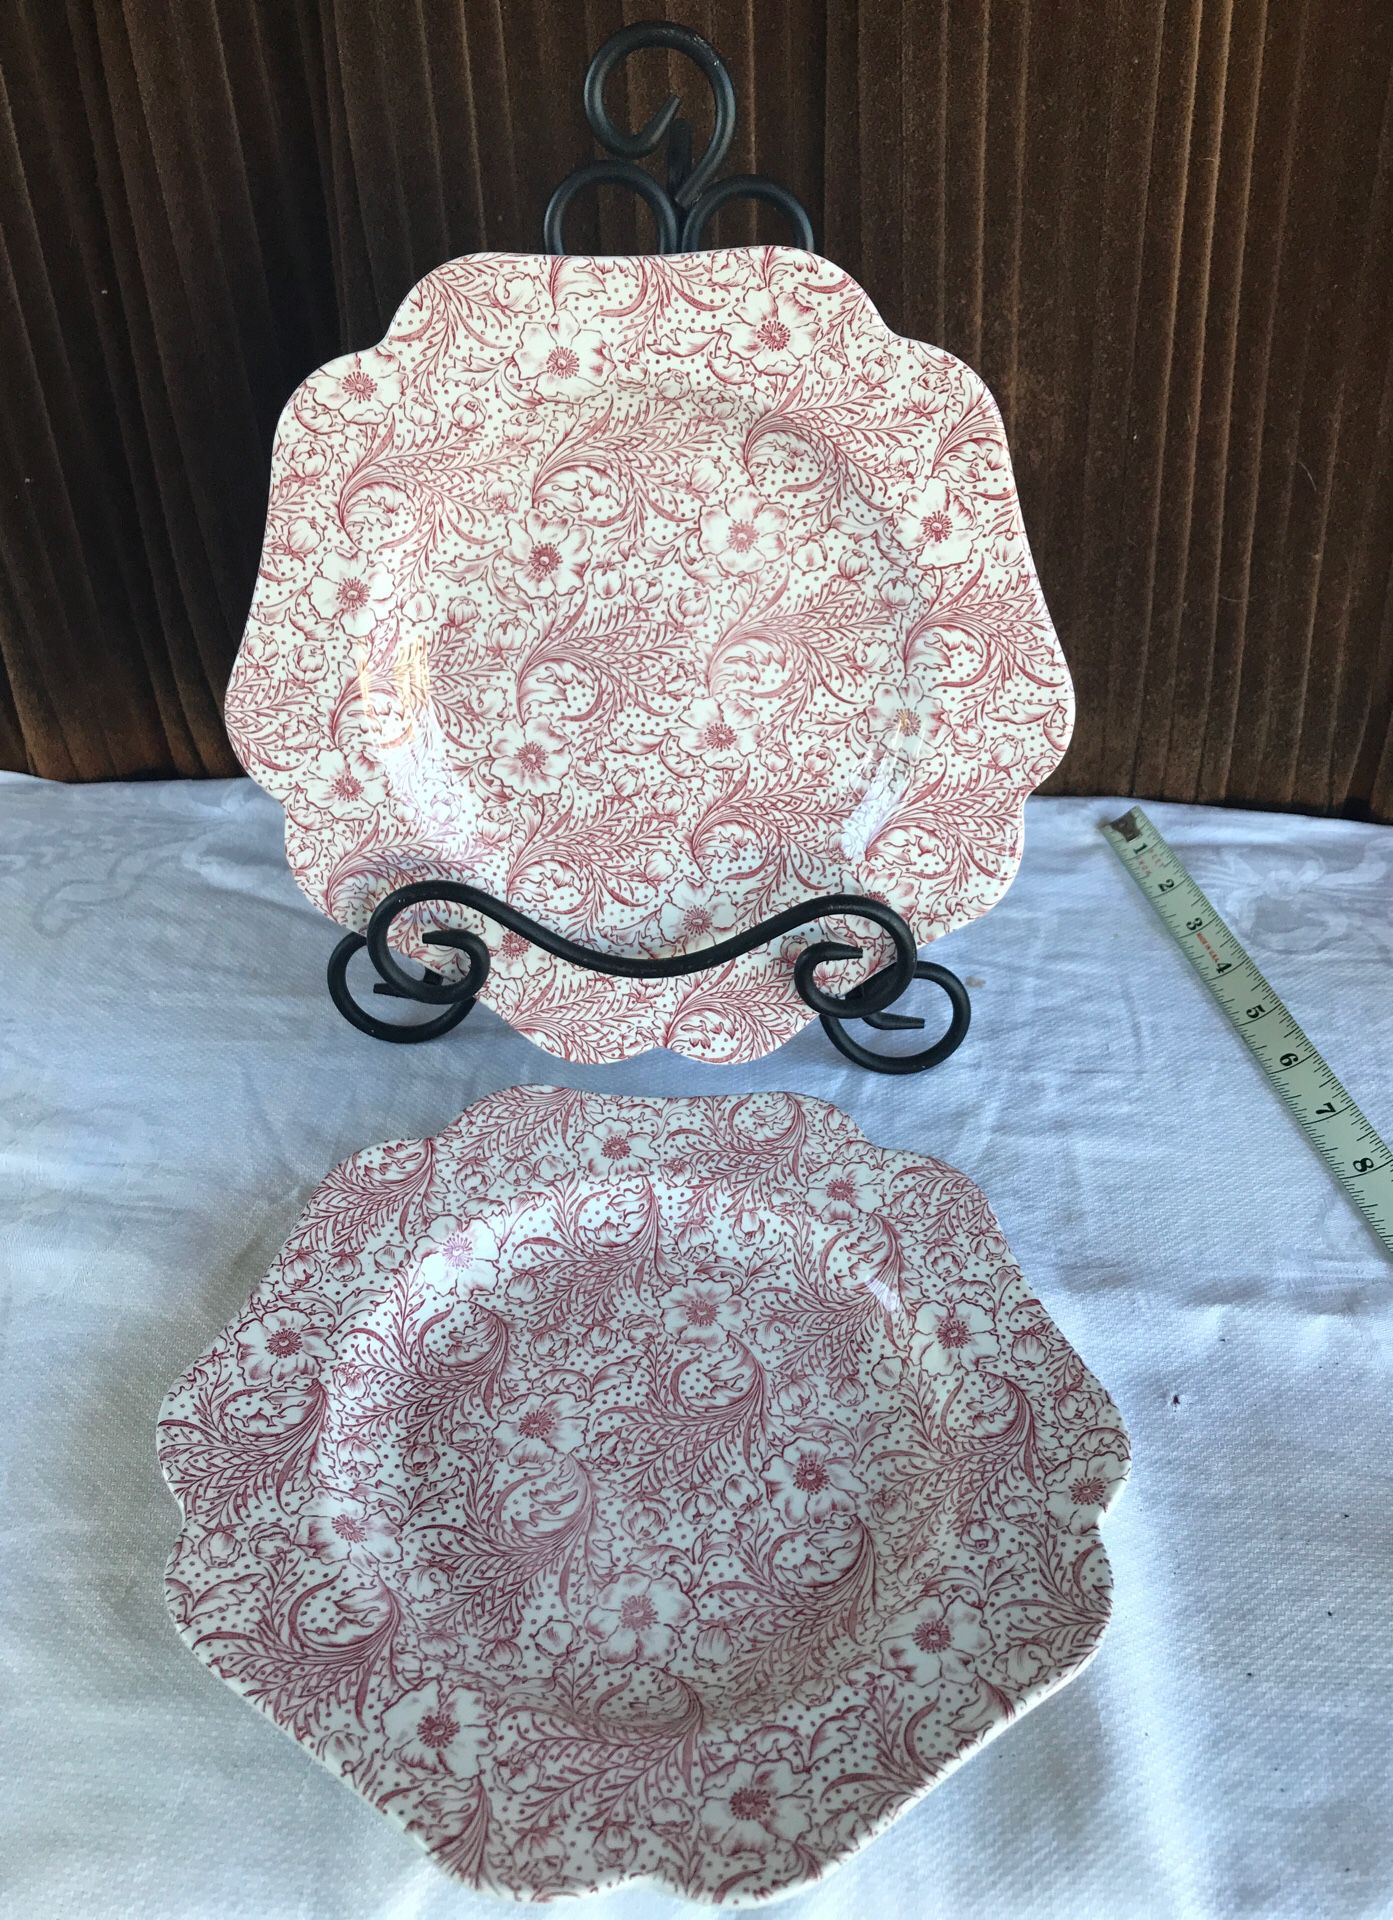 2 pink spode England plates